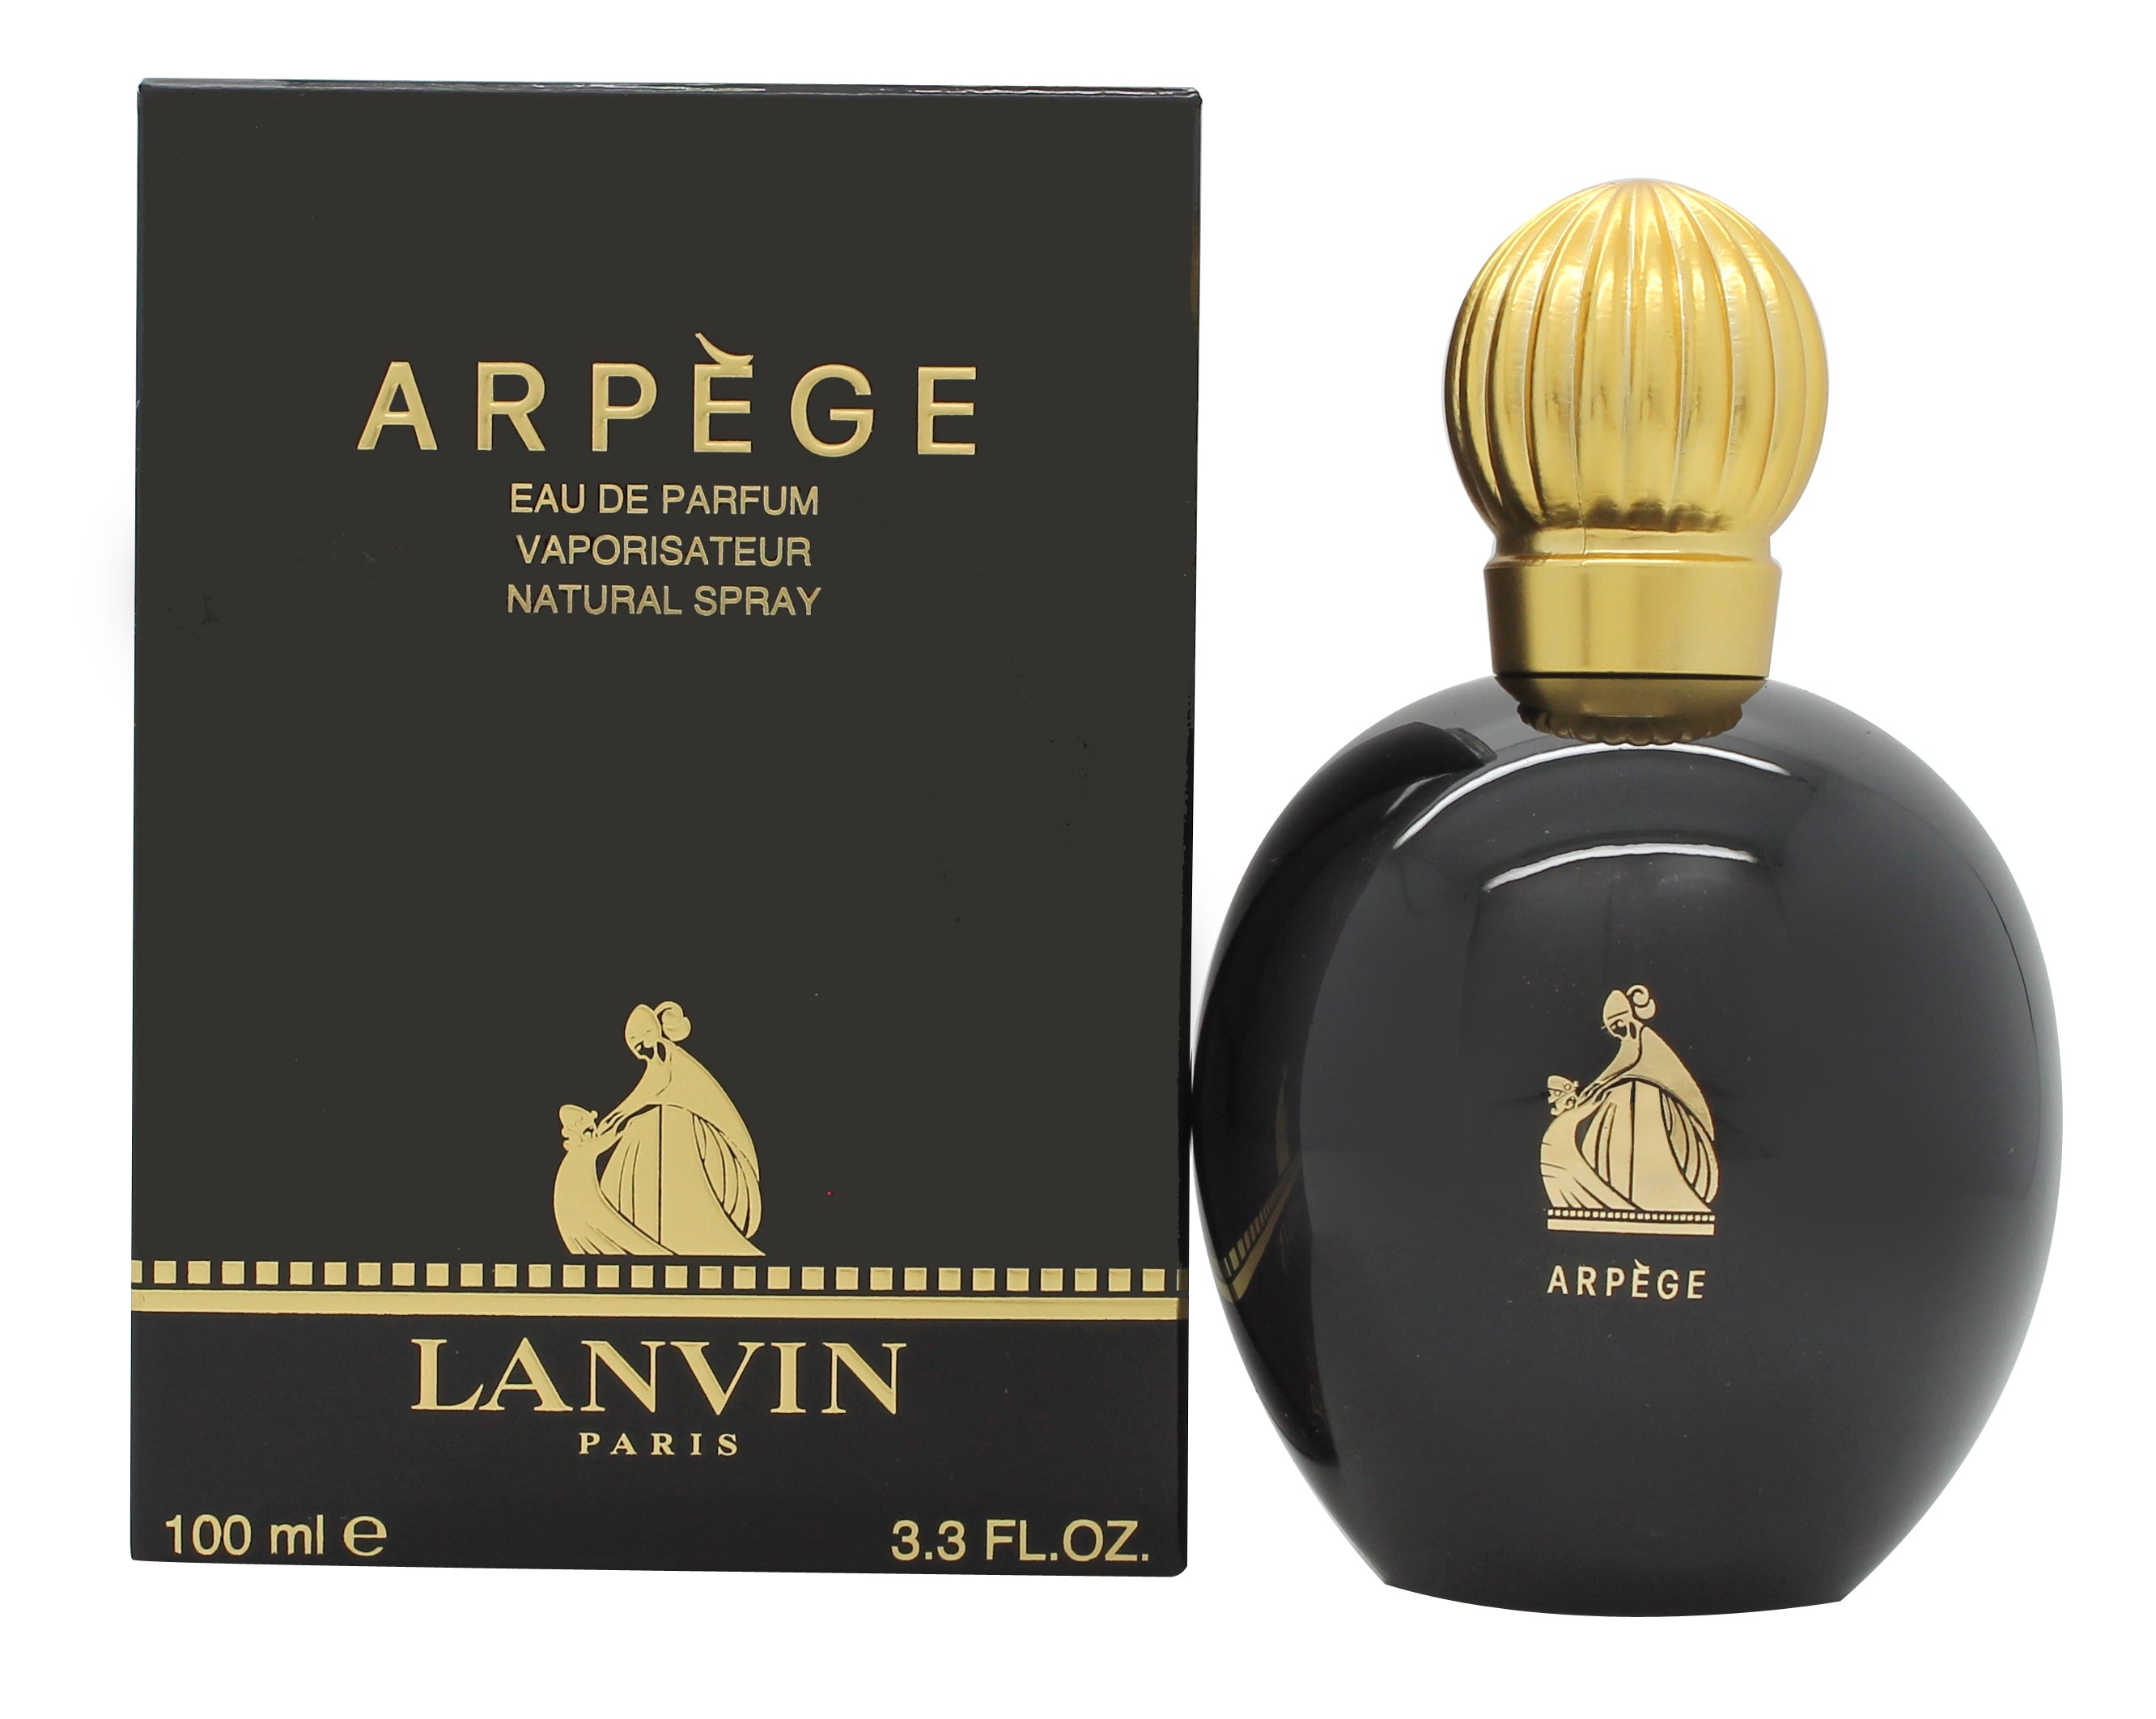 View Lanvin Arpege Eau de Parfum 100ml Spray information